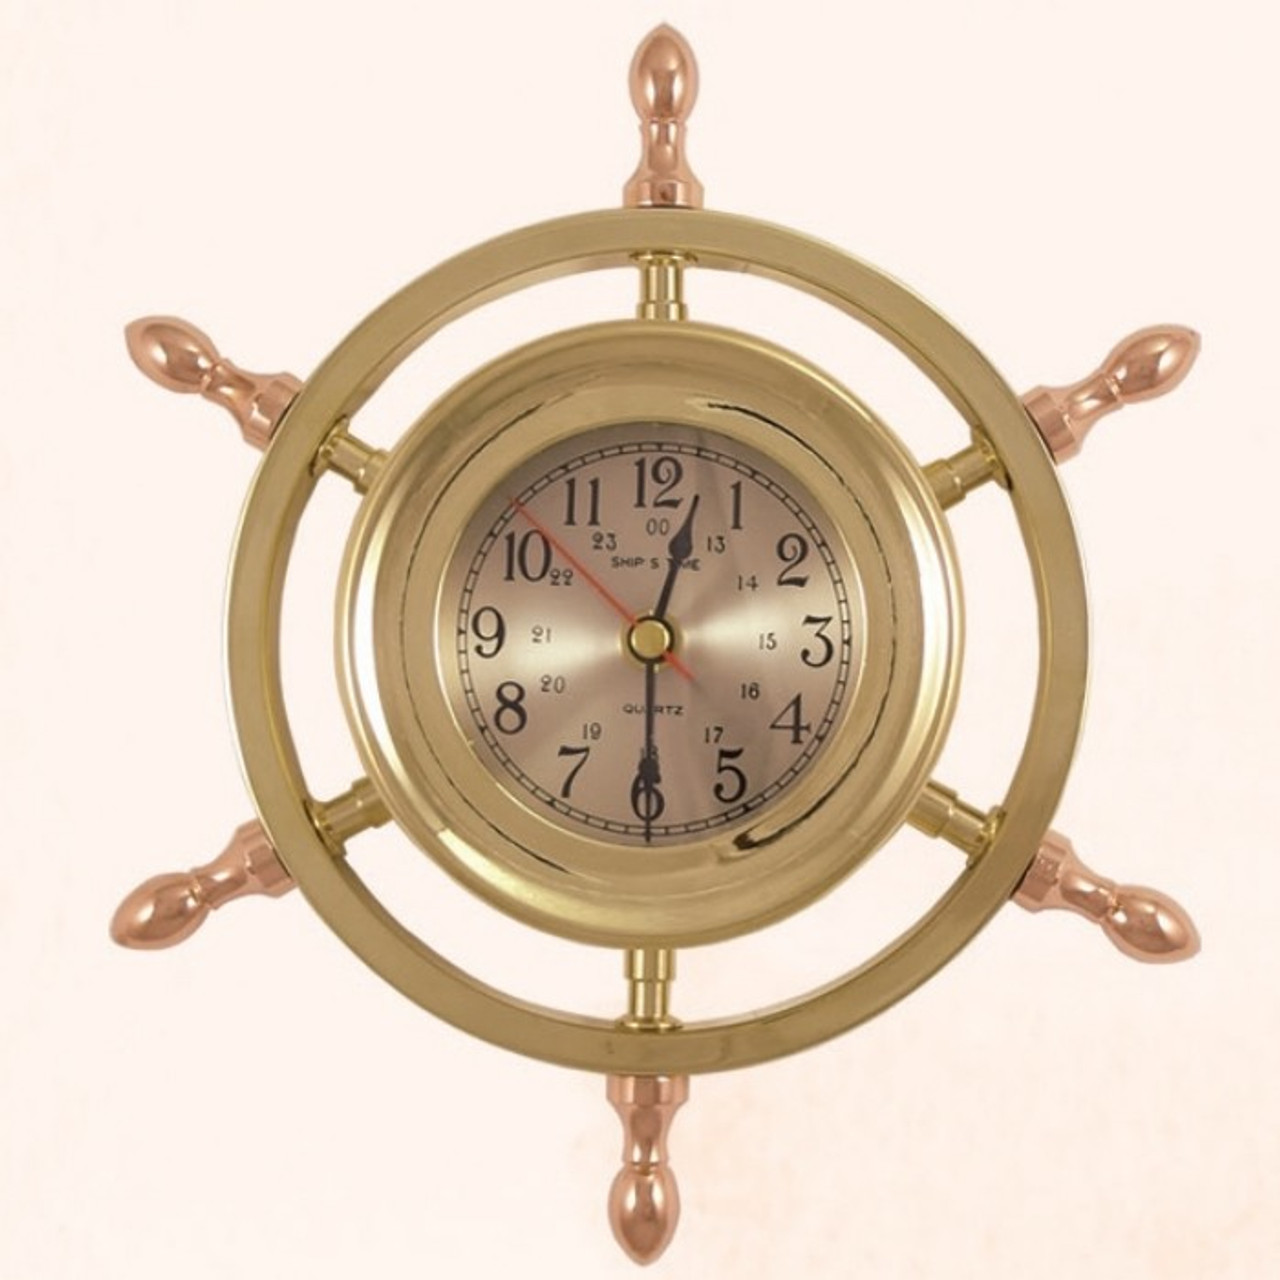 Ships Wheel Captain's Clock, 9 - Seaside Treasures - Nautical Decor,  Nautical Home Decor, Nautical Gifts, Coastal Gifts